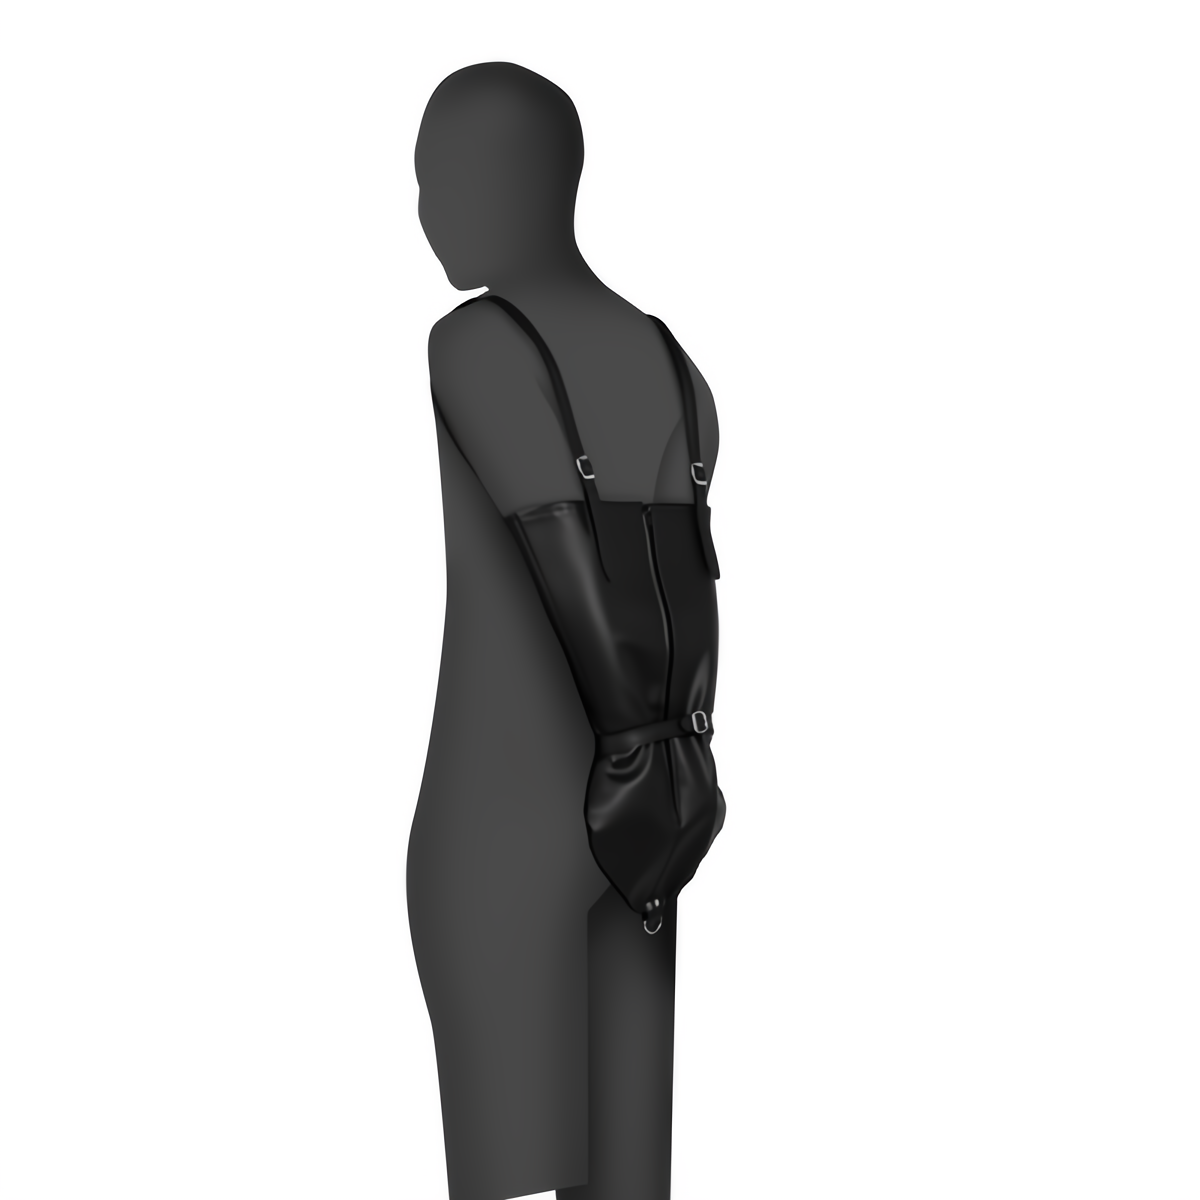 Zip-up Full Sleeve Arm Restraint - Black